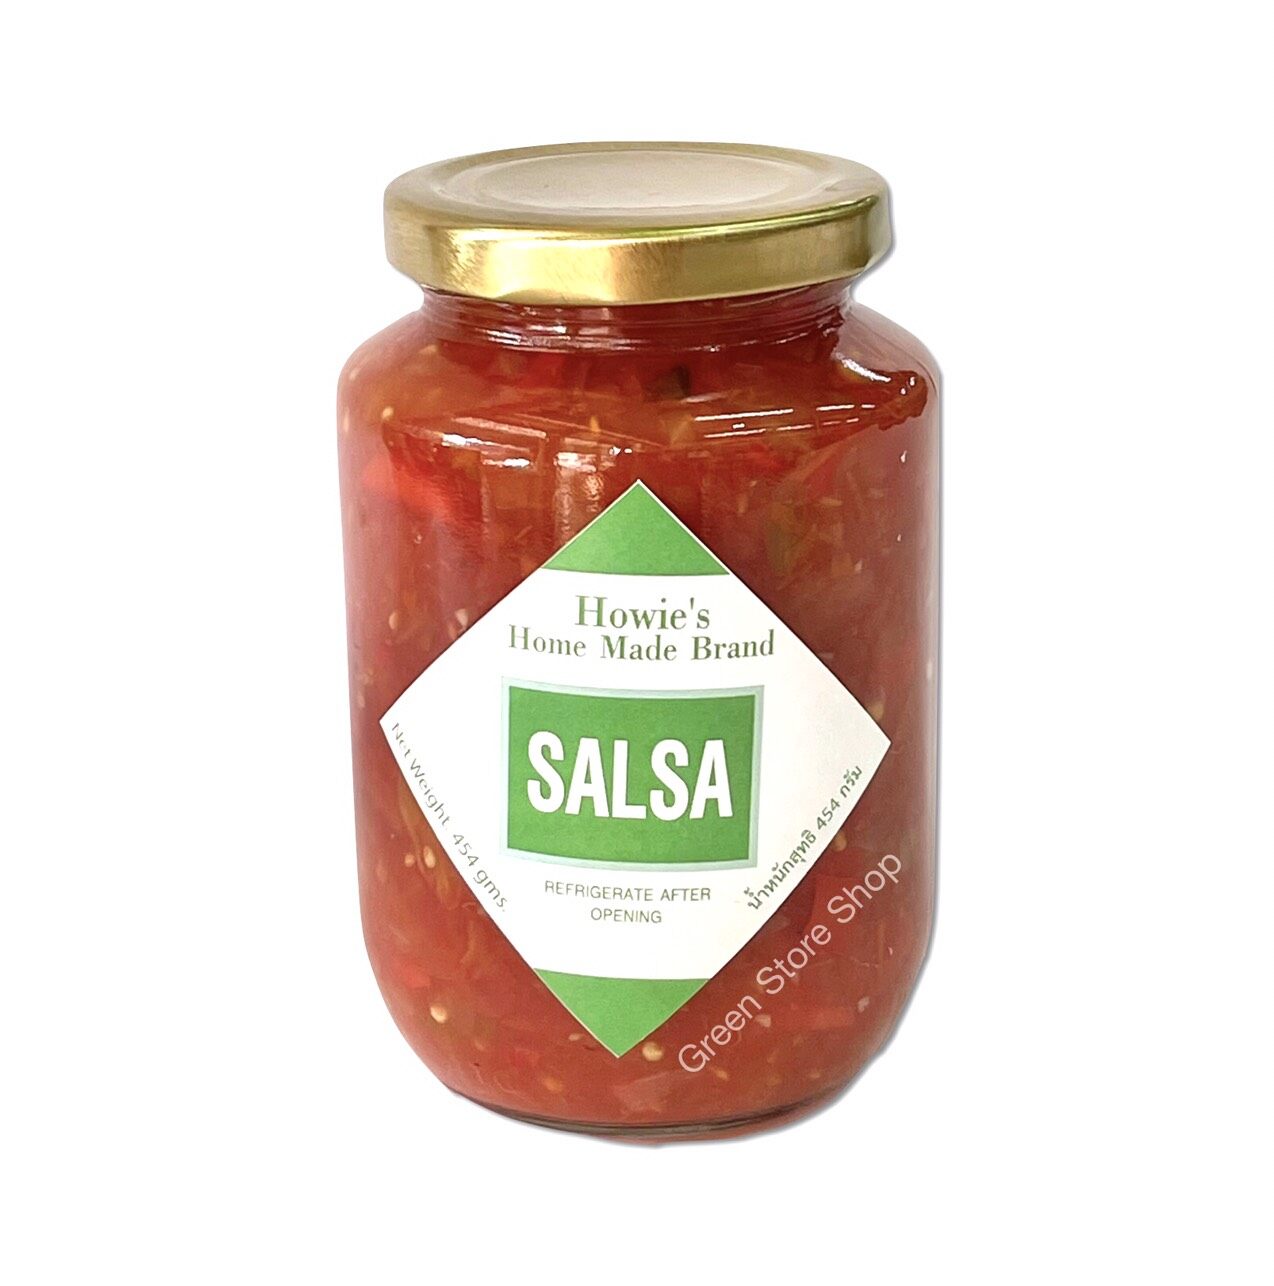 Howie’s Home Made Salsa Sauce 454g. ( ซอสซัลซ่า )